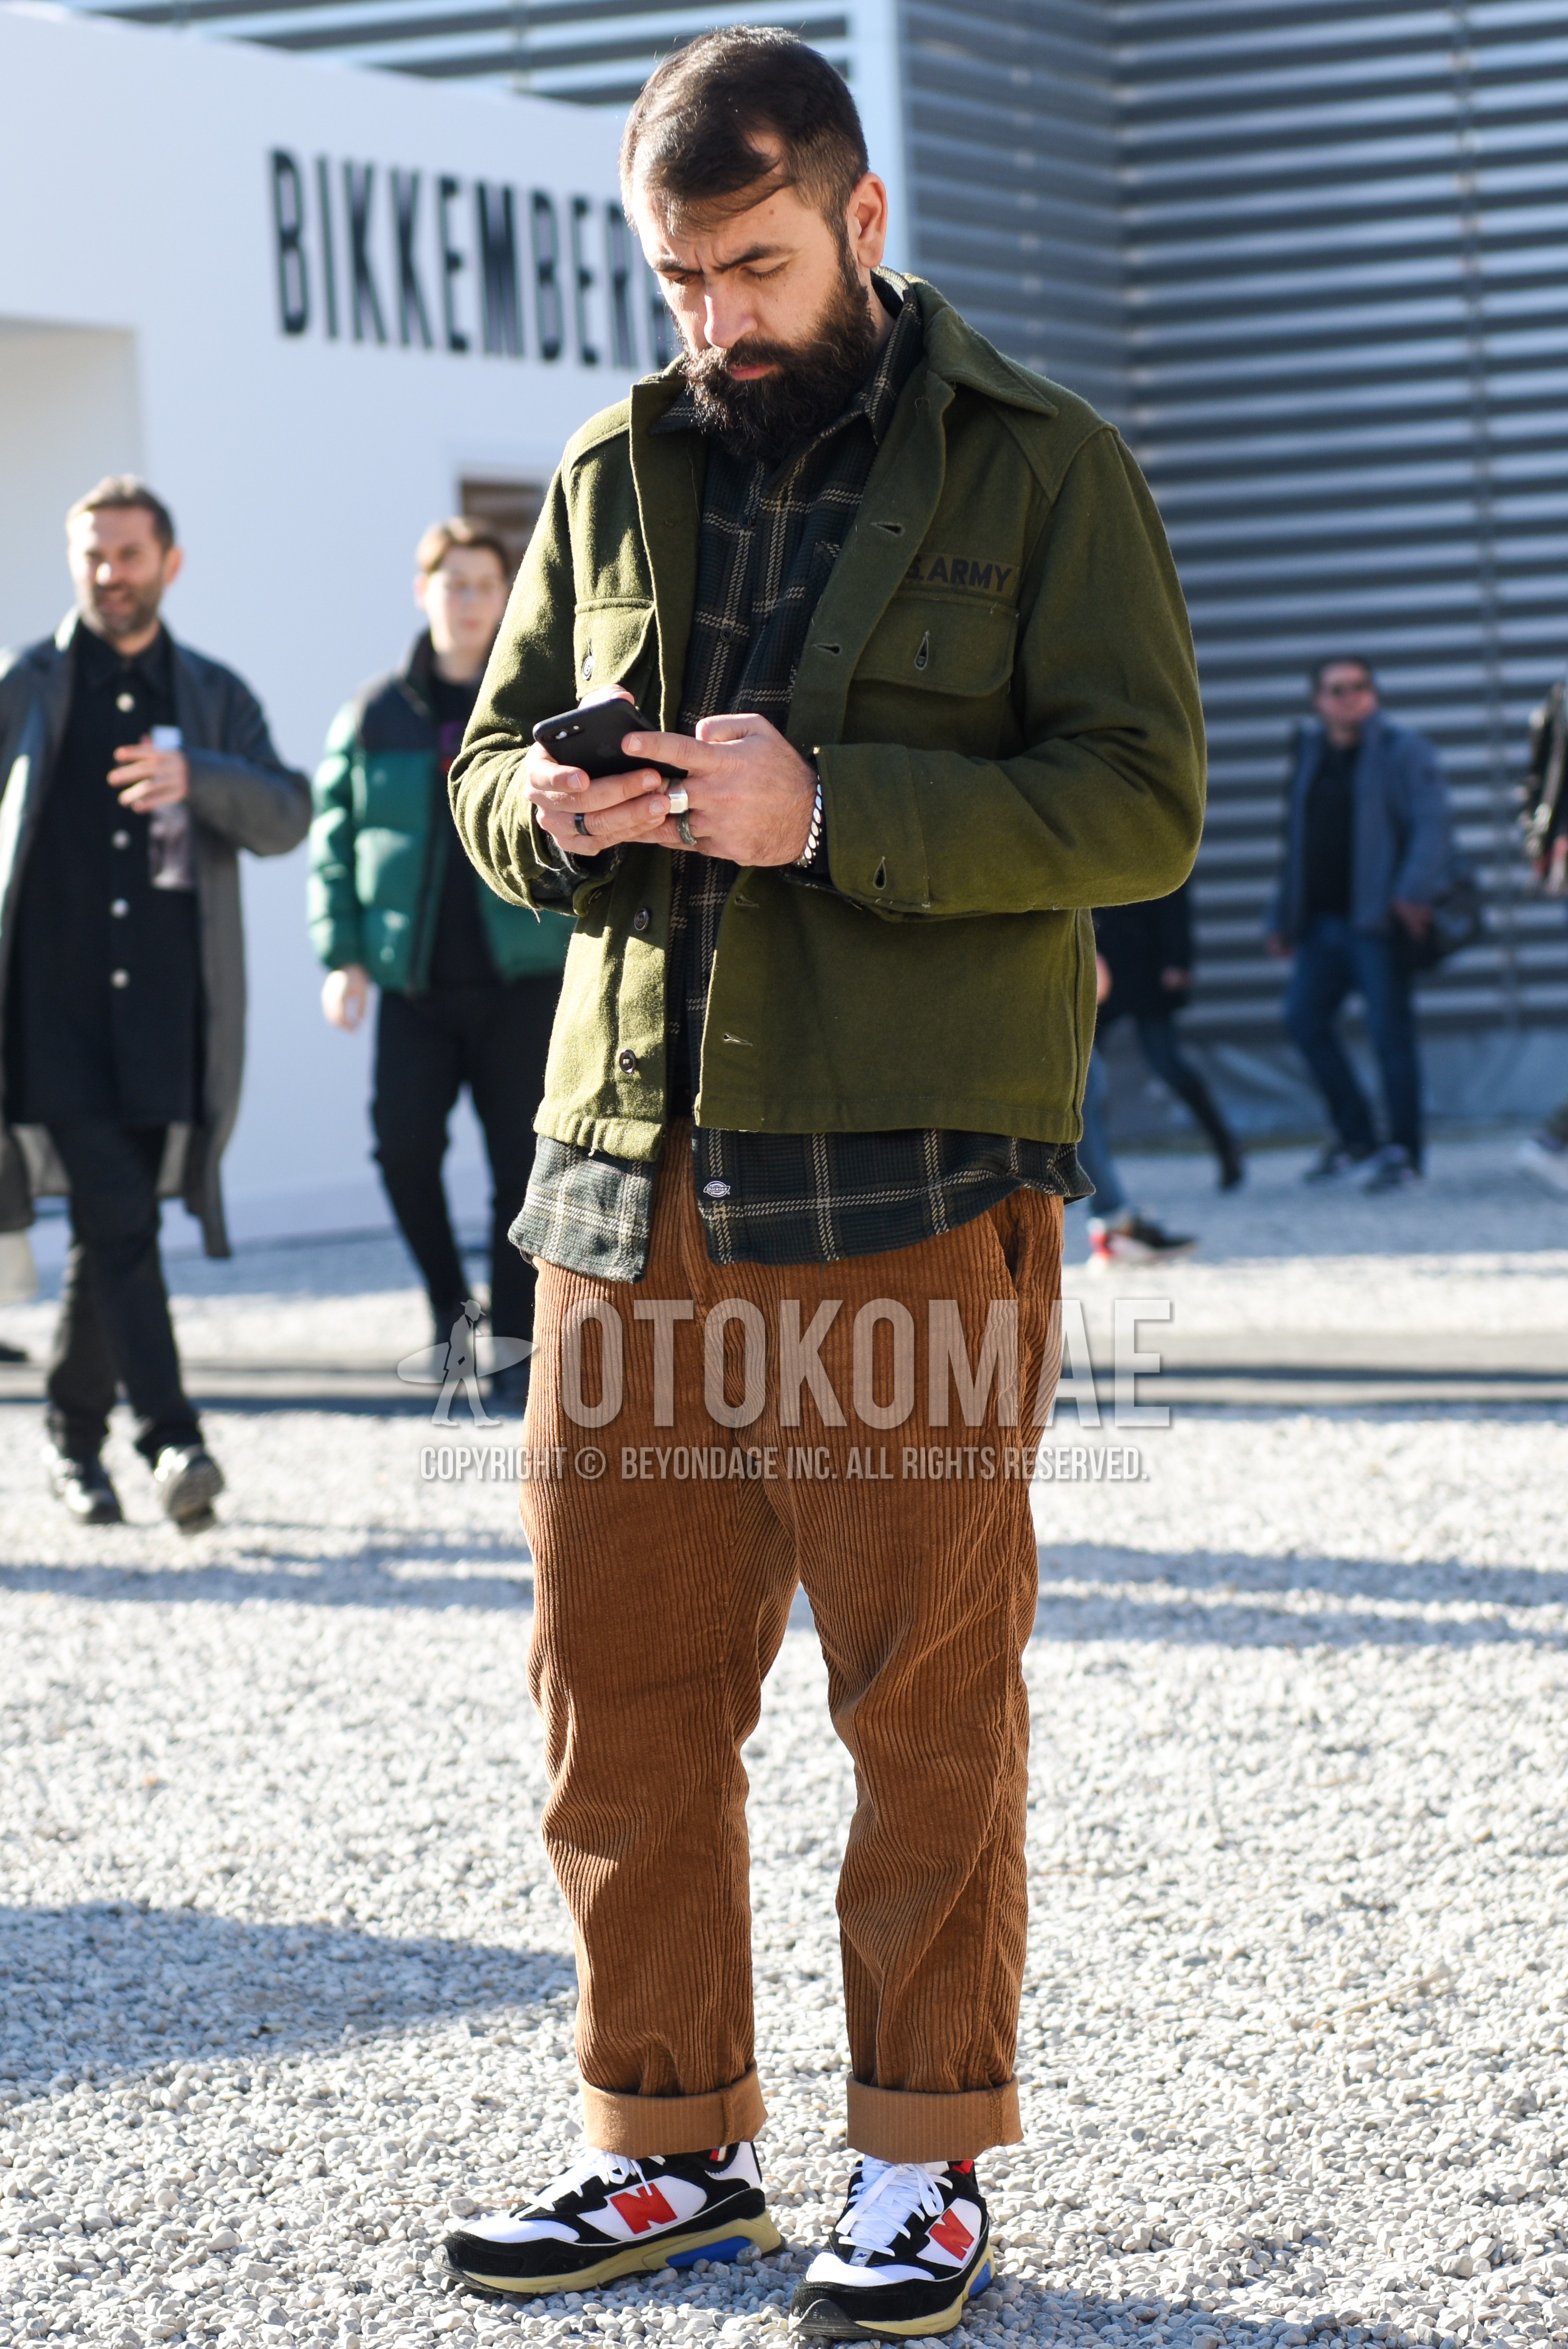 Men's autumn winter outfit with olive green plain shirt jacket, dark gray check shirt, brown plain winter pants (corduroy,velour), white black low-cut sneakers.